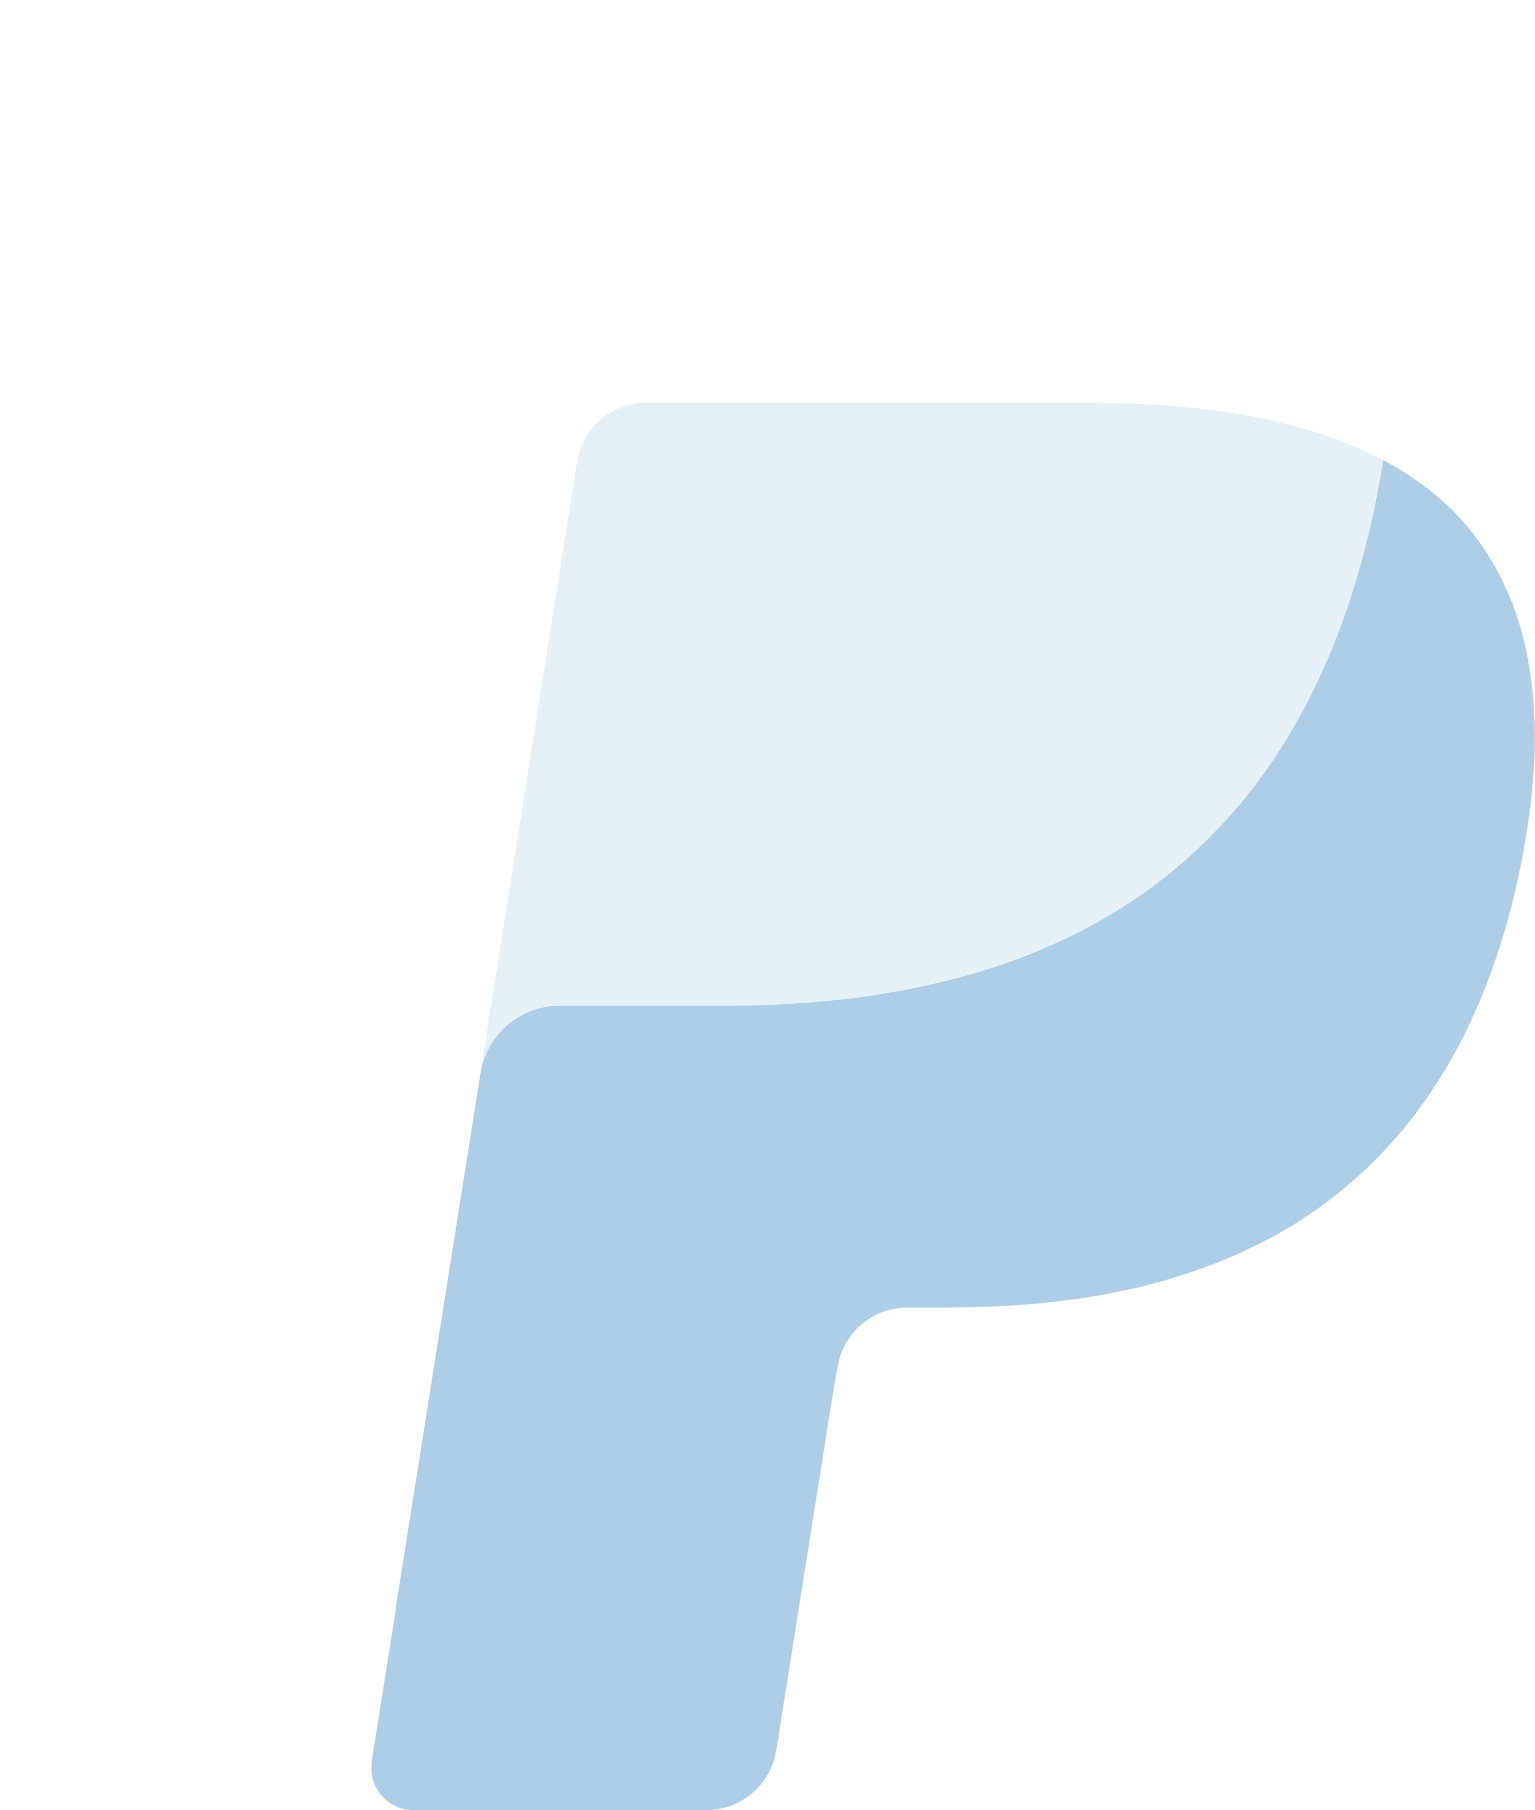 PayPal logo for dark backgrounds (transparent PNG)